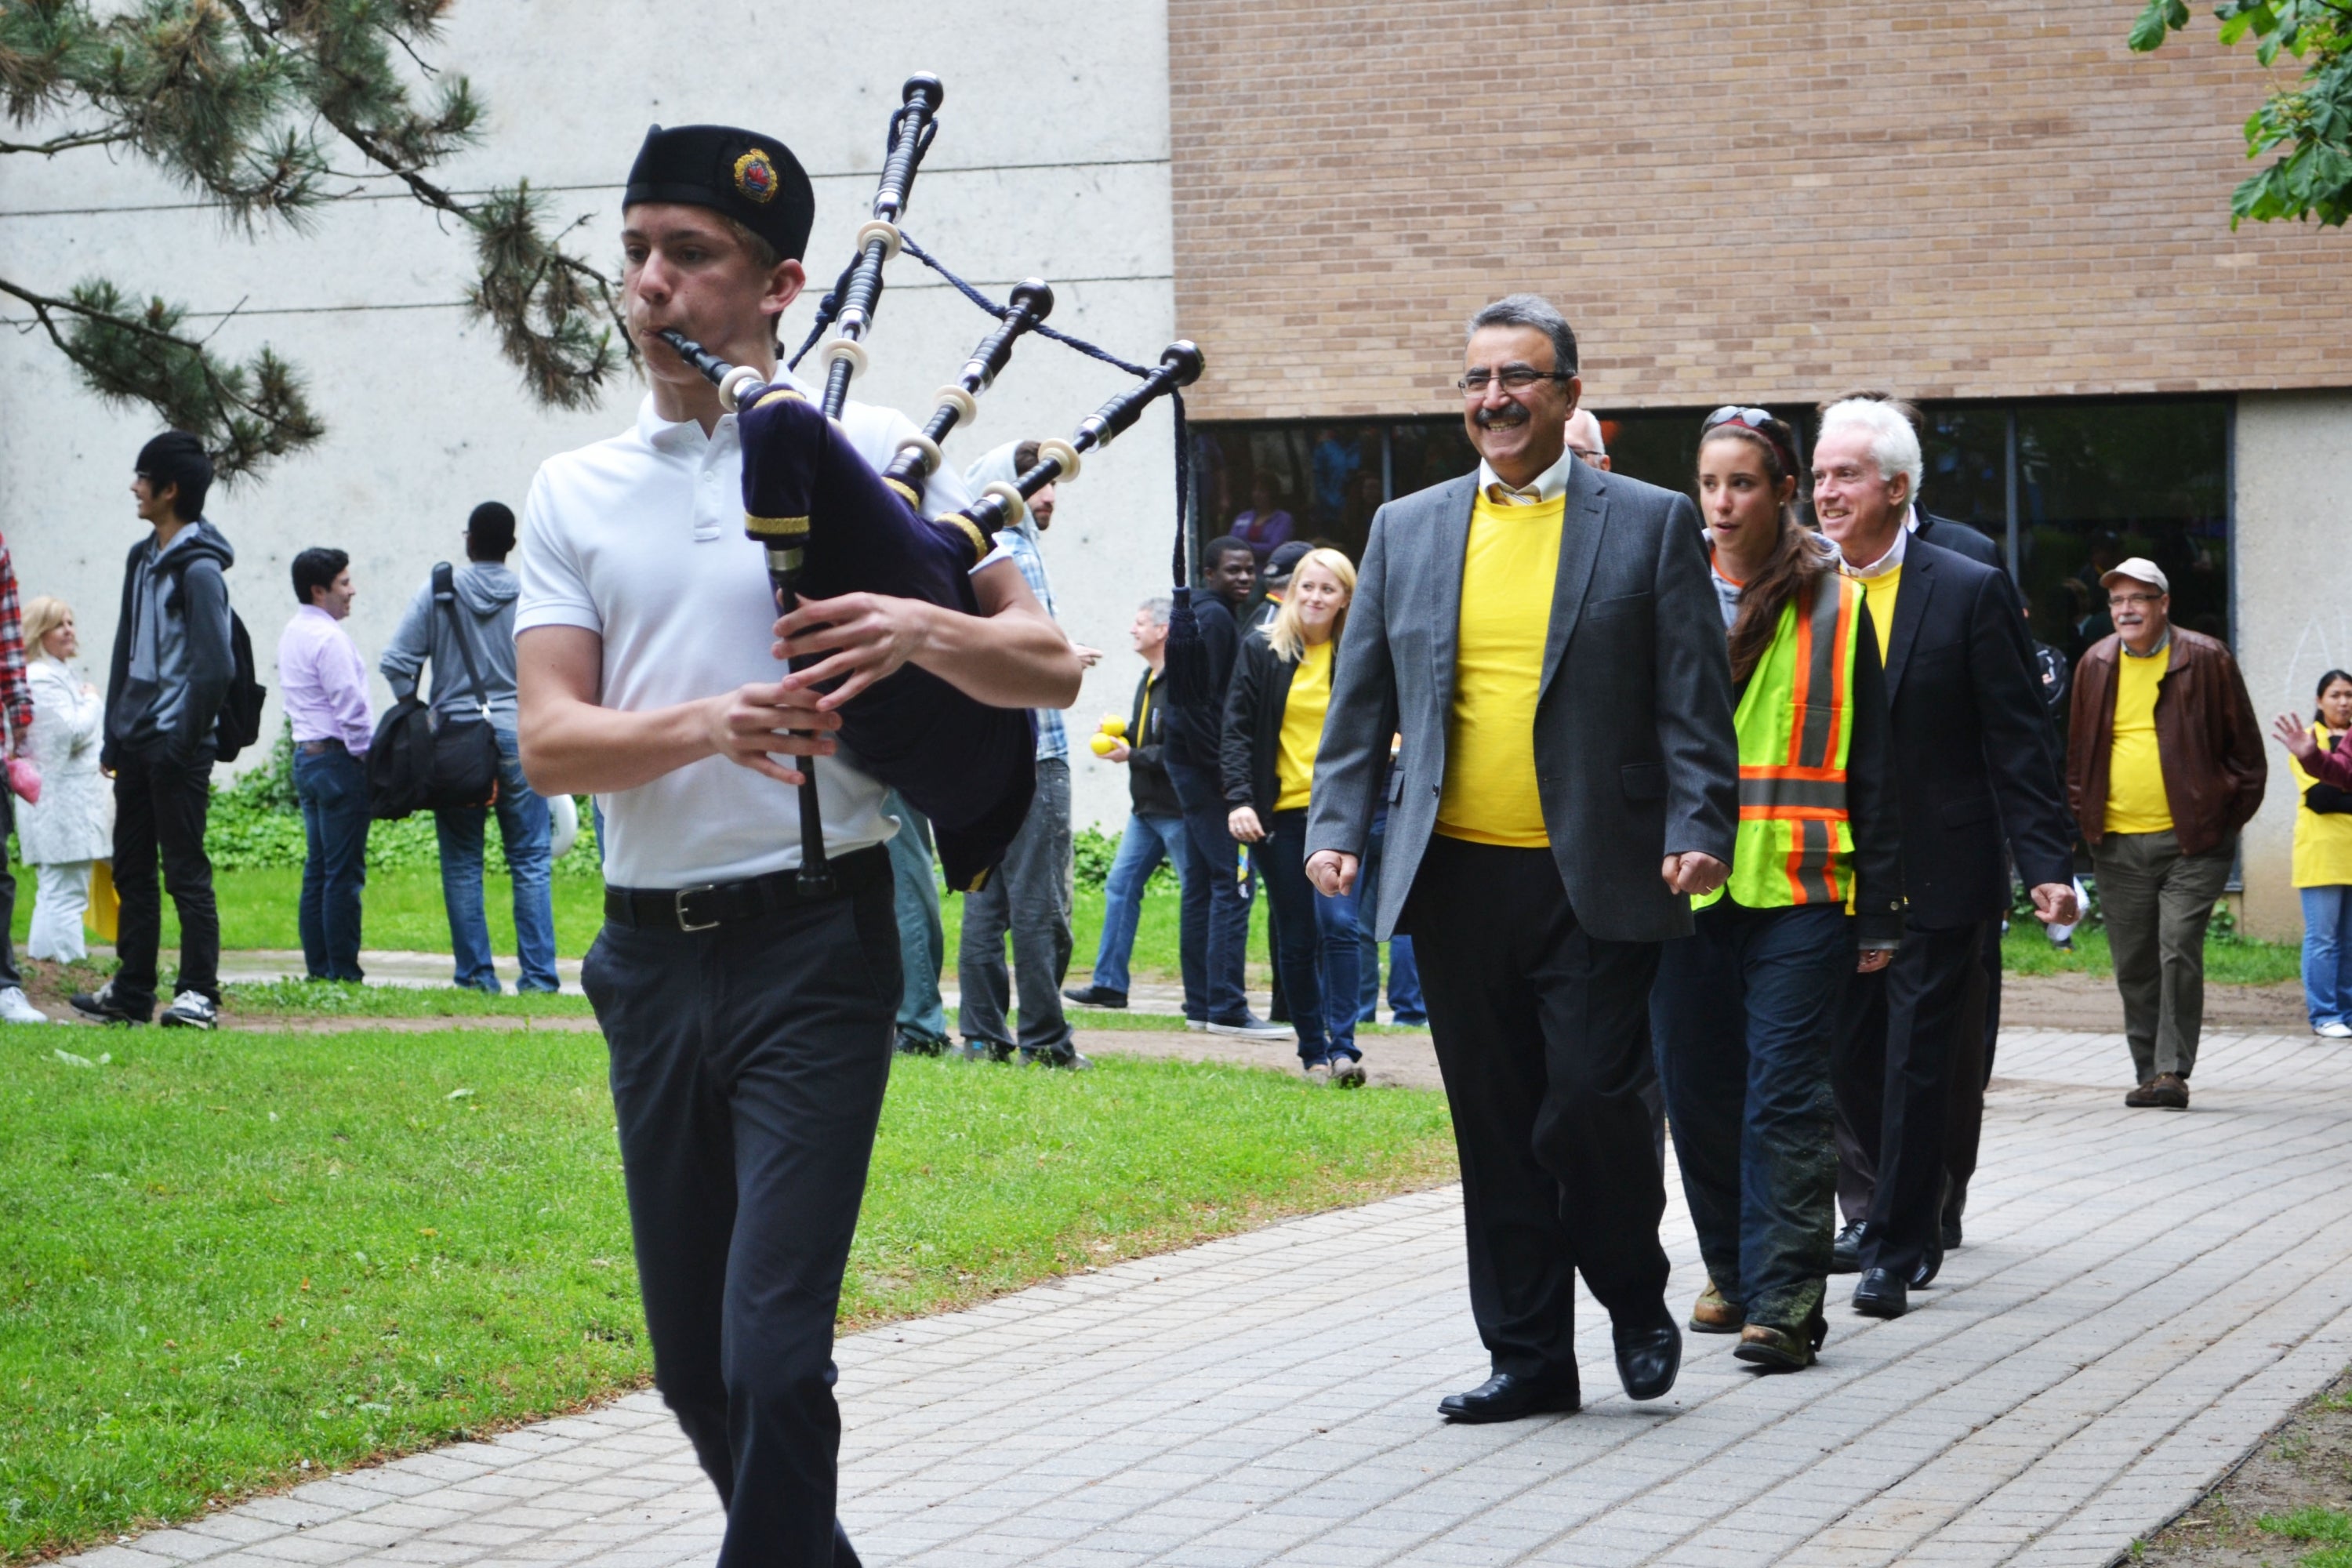 University leaders participate in the Keystone Picnic procession.